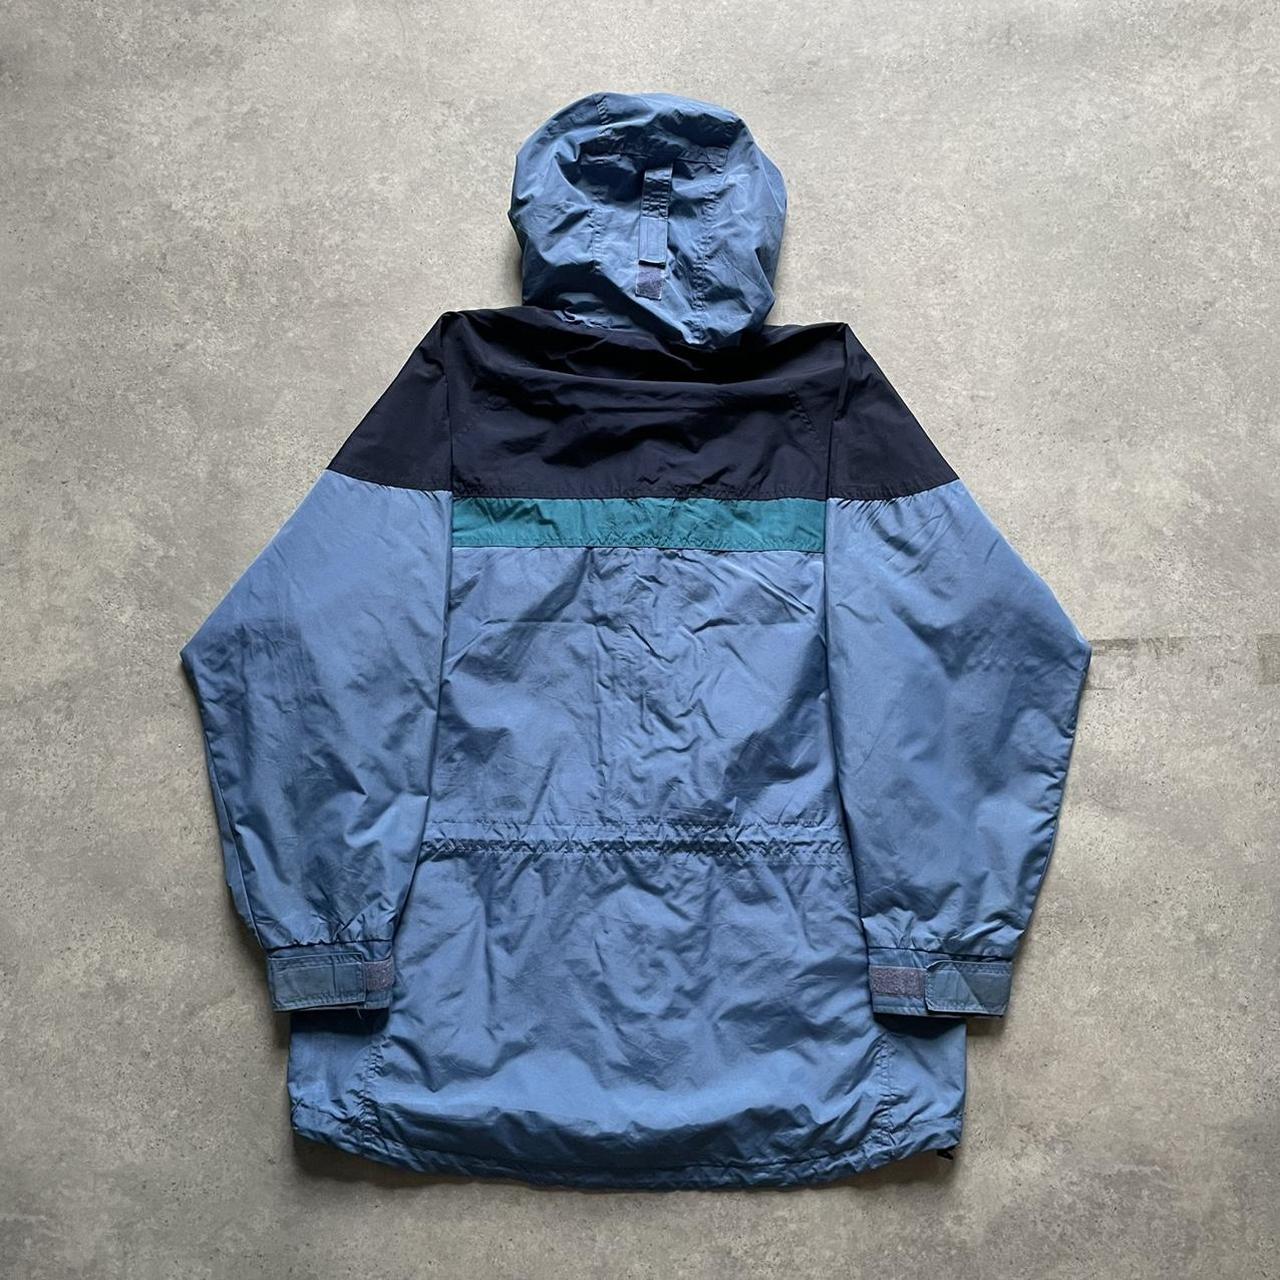 Columbia jacket 90s columbia rain coat in a two... - Depop